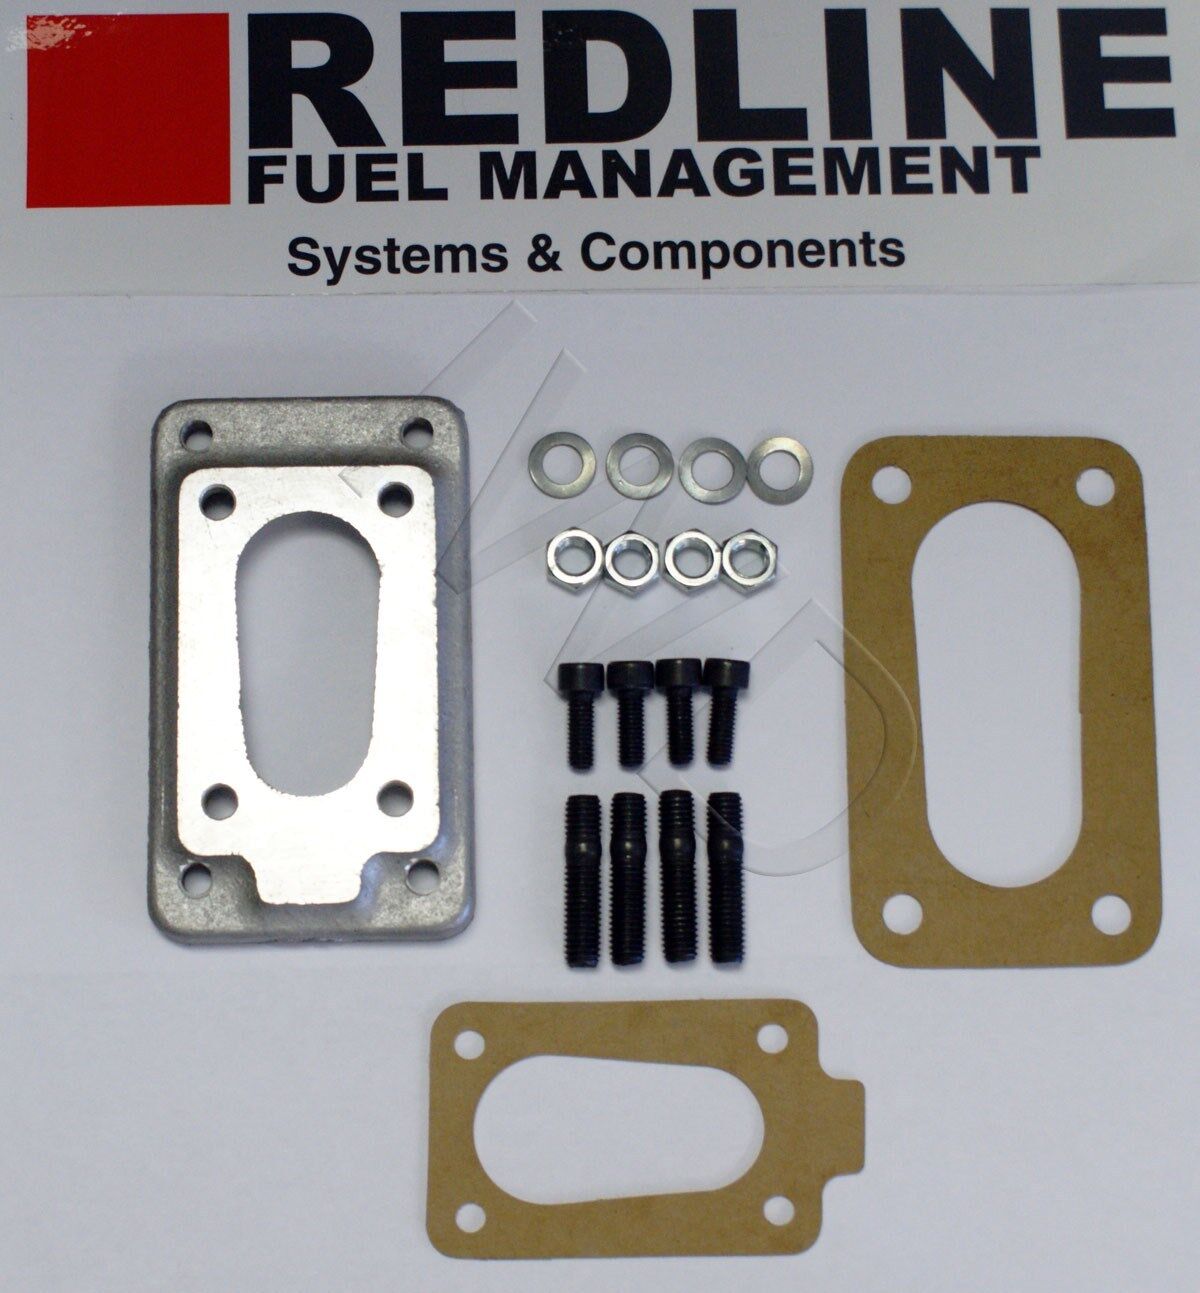 Adapter plate for installing Weber carb - Honda Civic Datsun B210/ 310 /210/1200